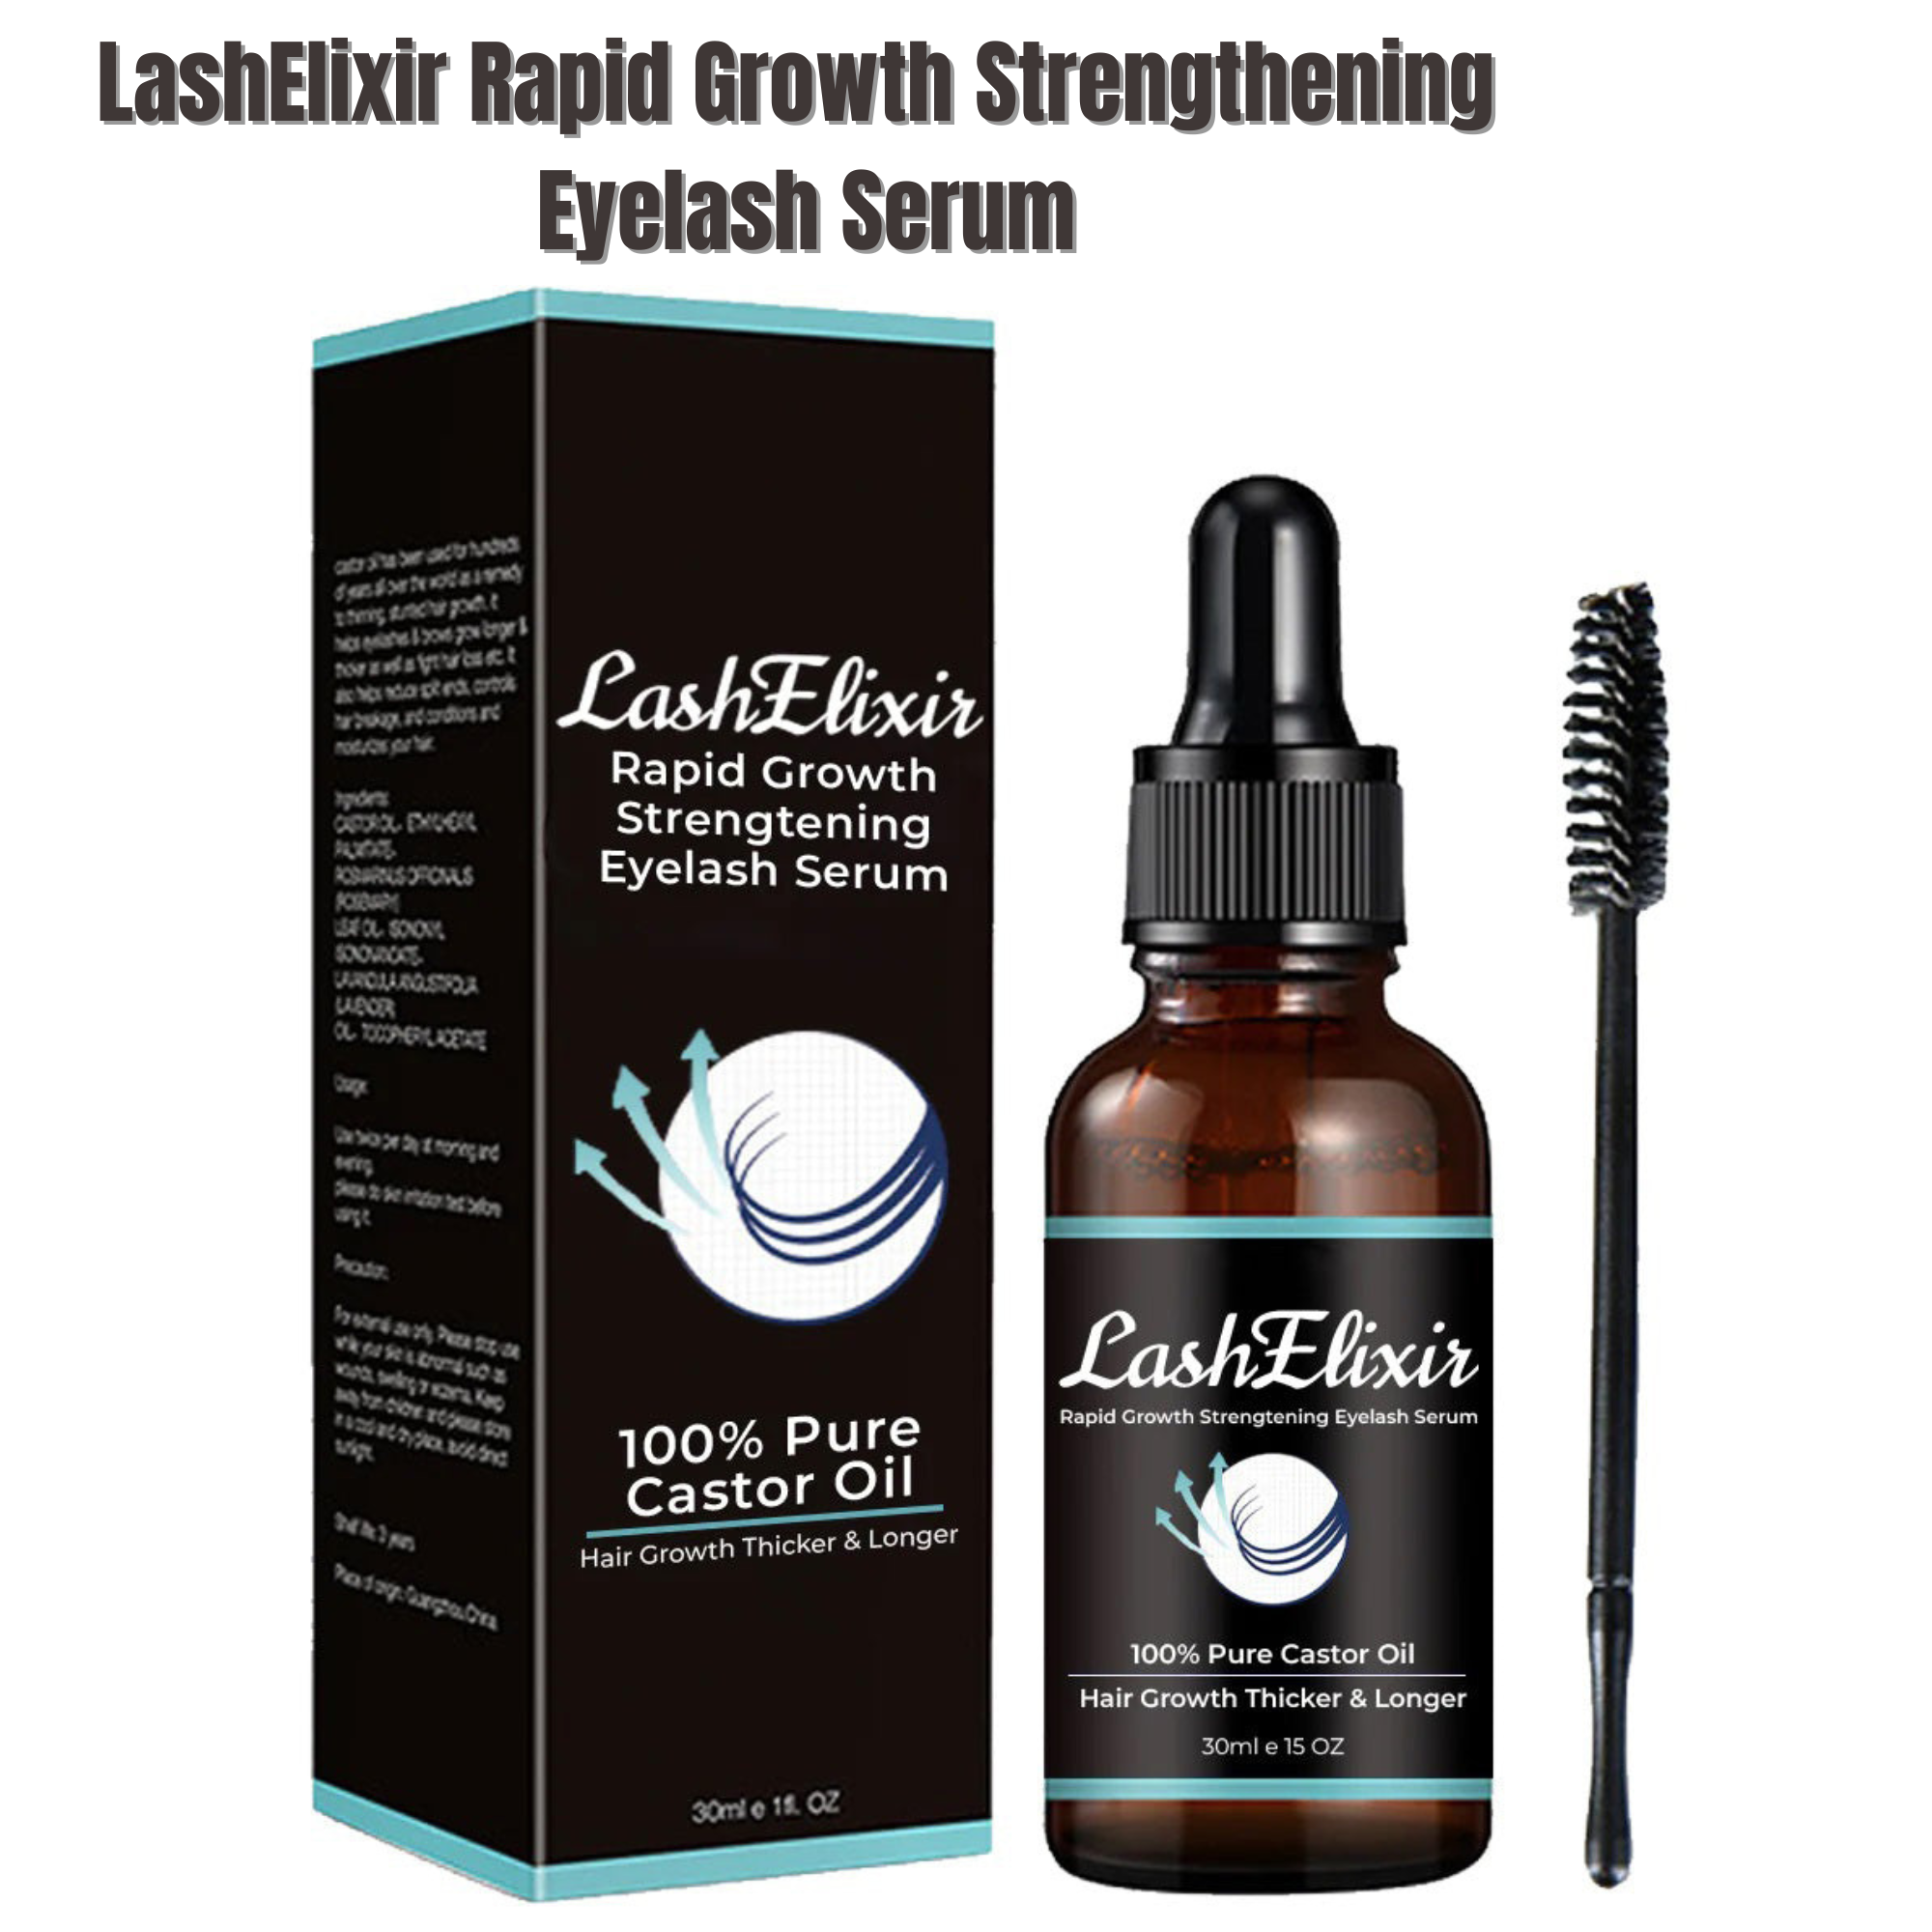 LashElixir Rapid Growth Strengthening Eyelash Serum